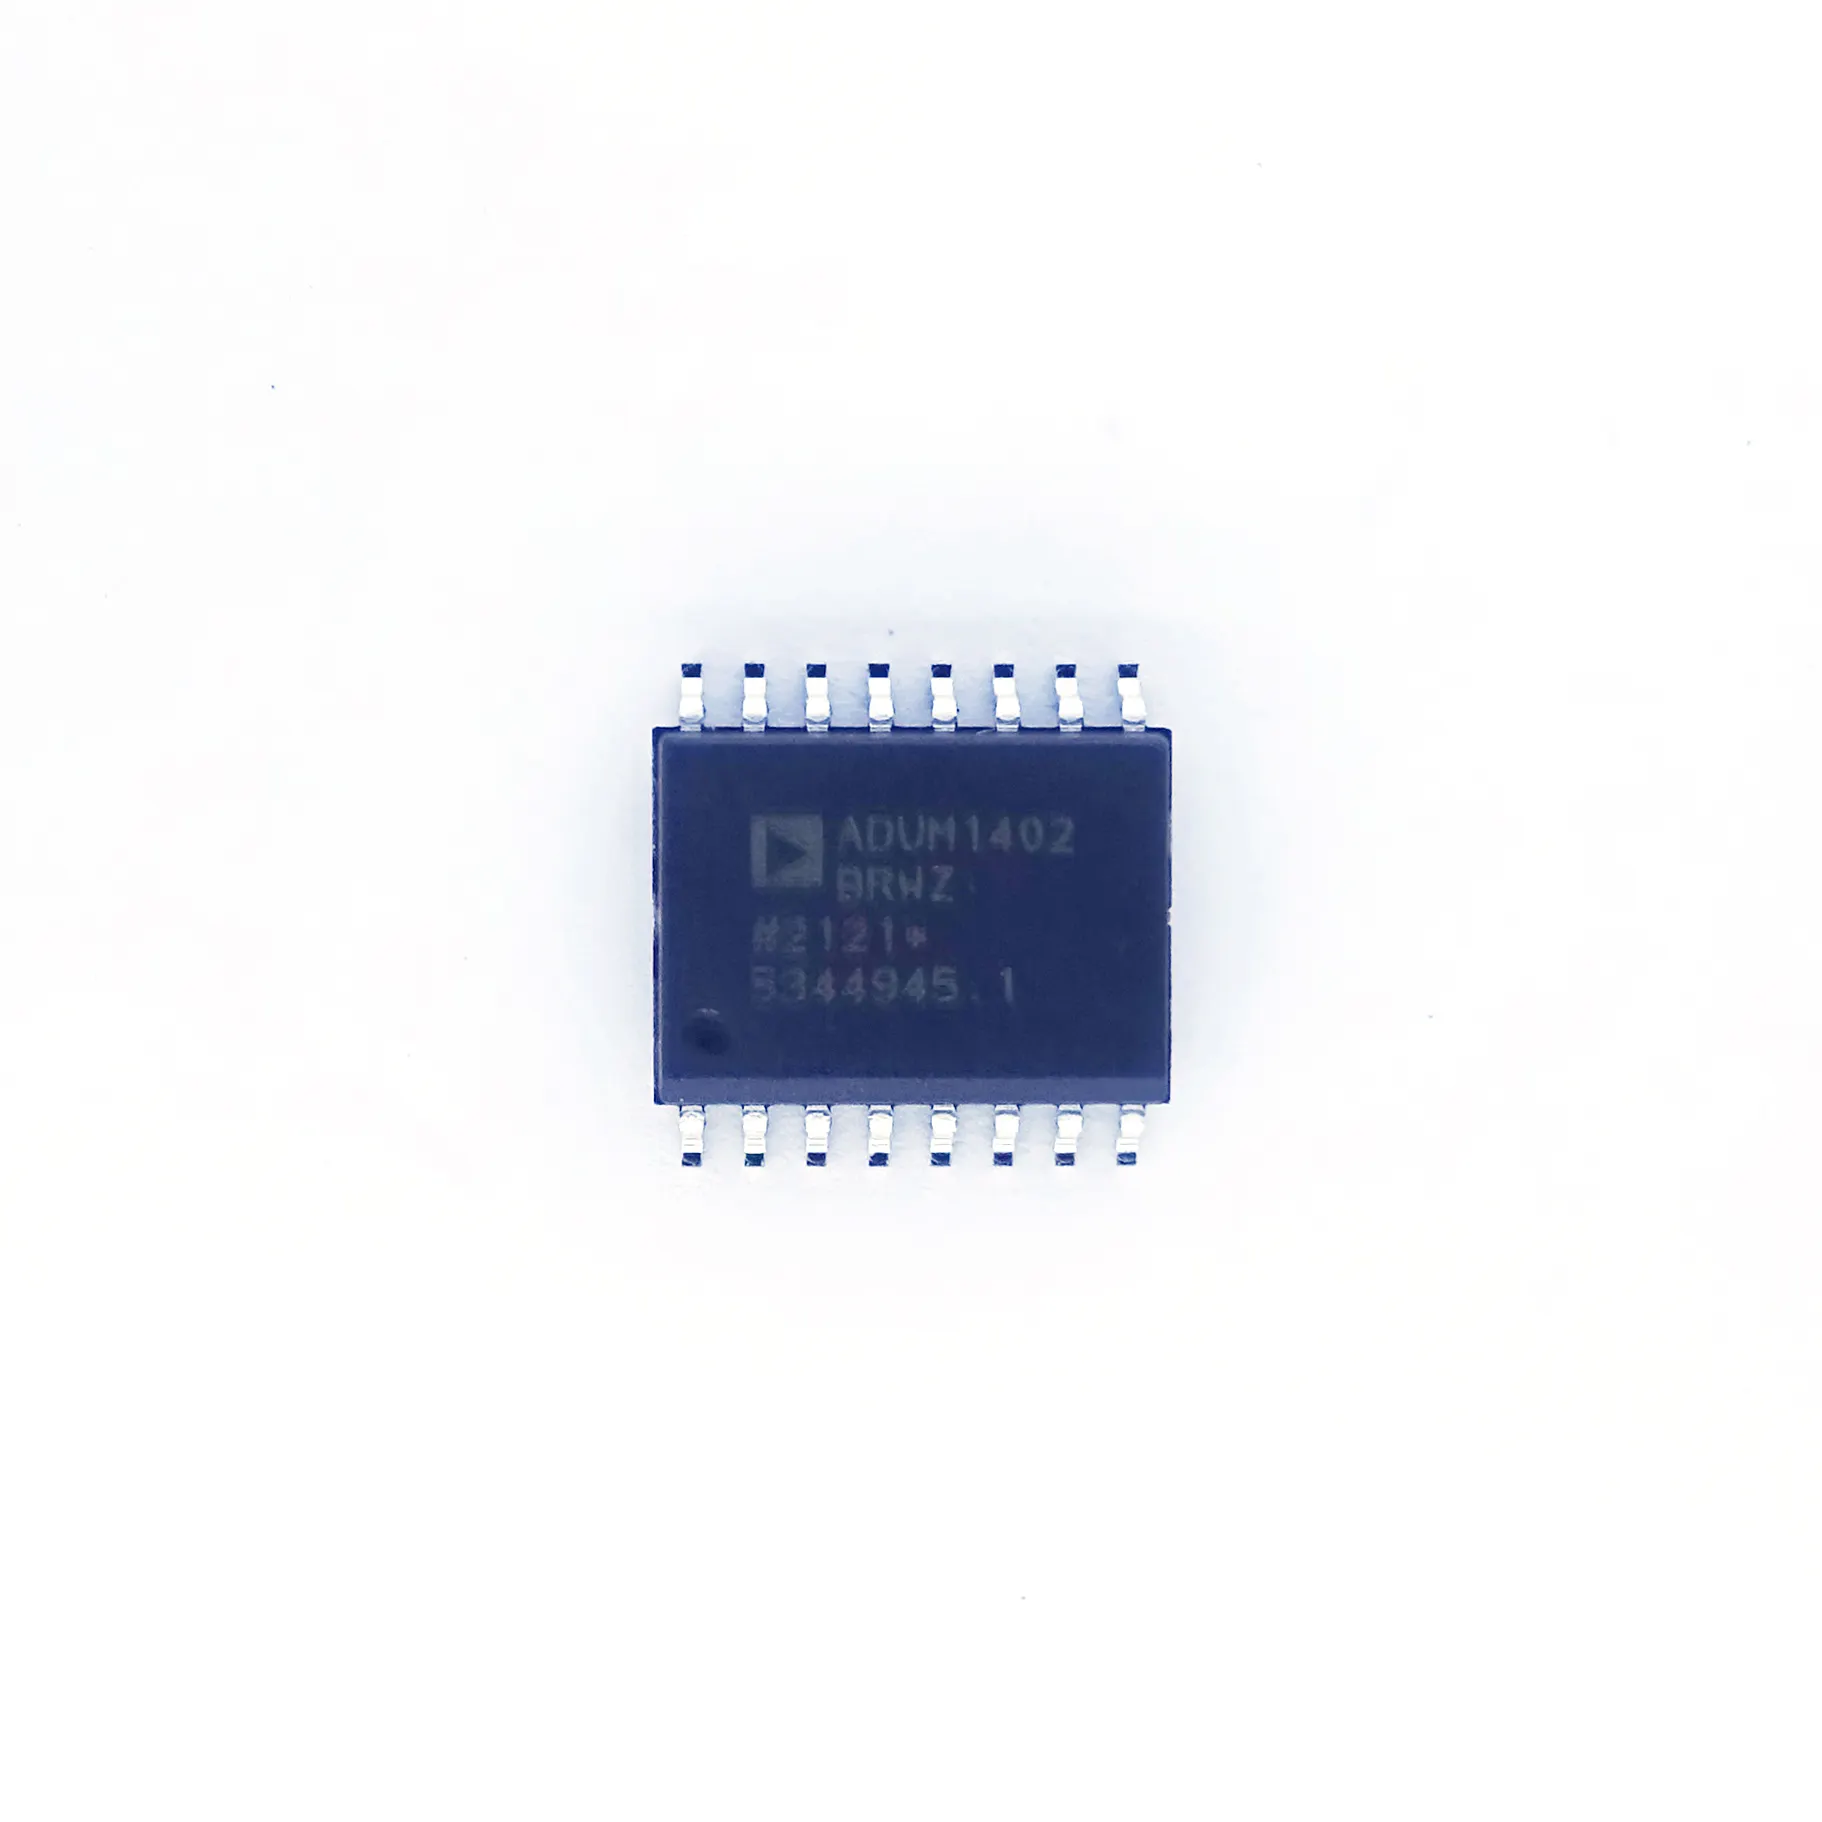 Nuovo originale in stock vendita calda chip interfaccia ci isolatori digitali SOIC-16 ADUM1402BRWZ